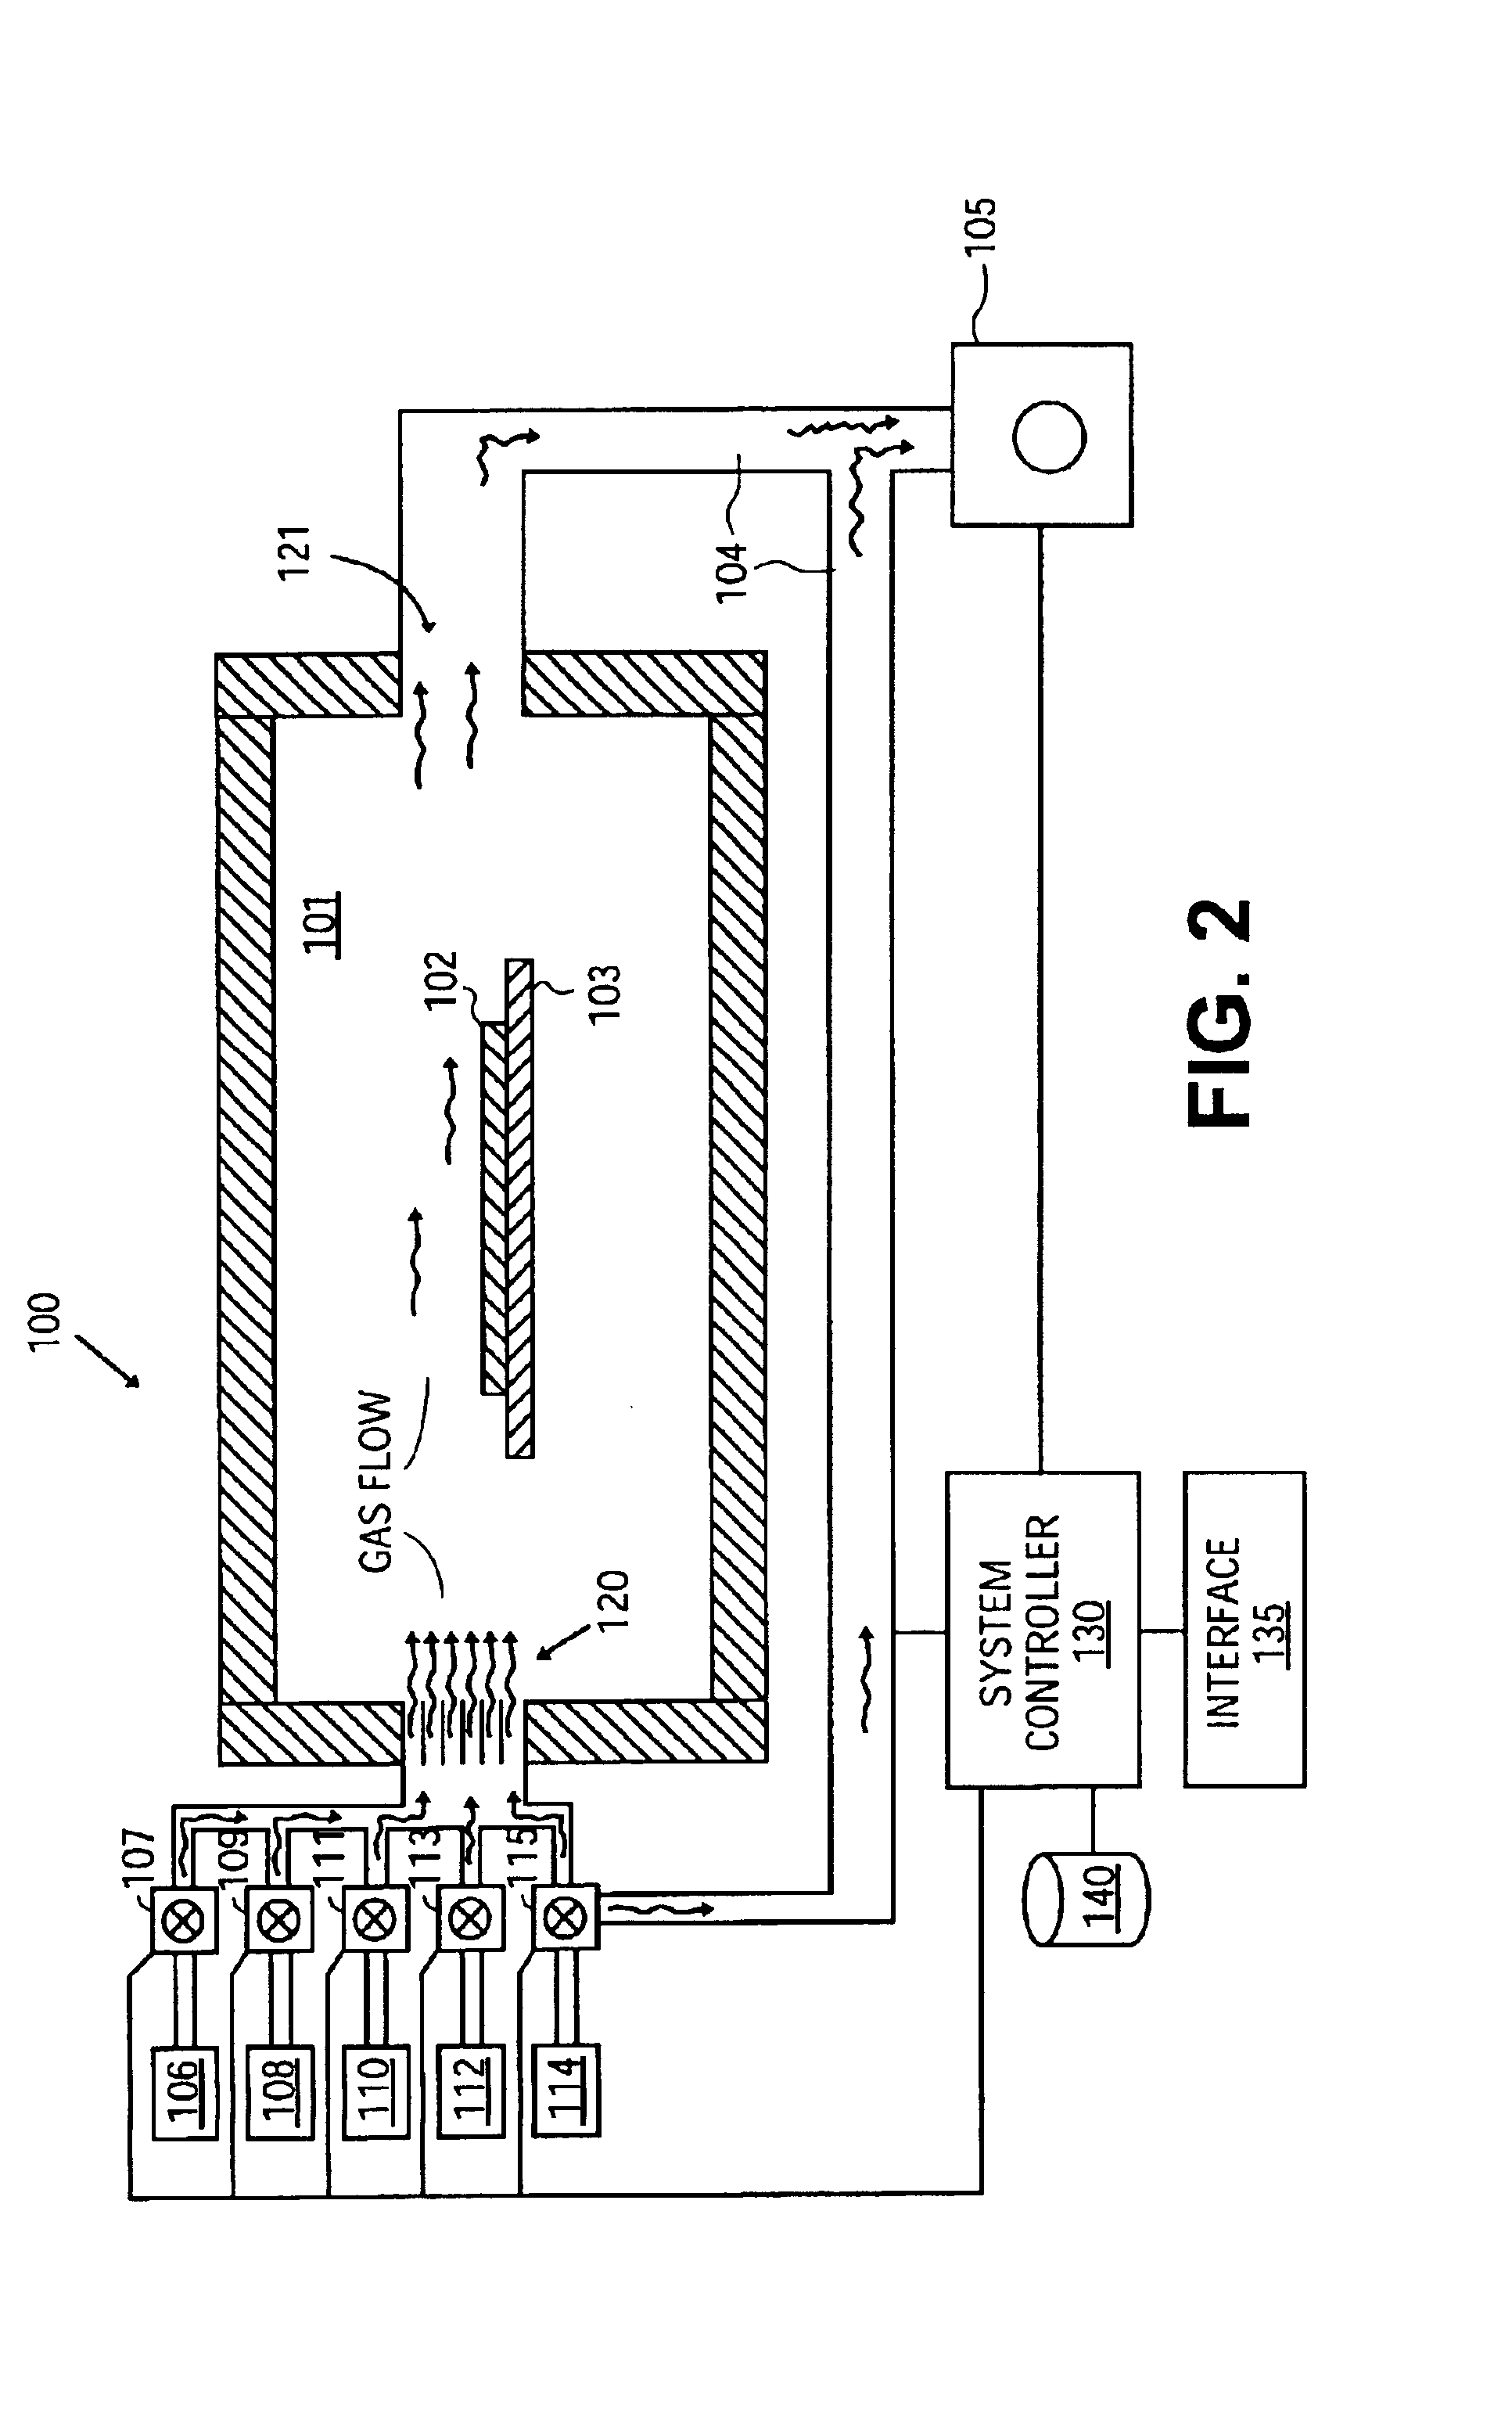 Method for fabricating a bipolar transistor base